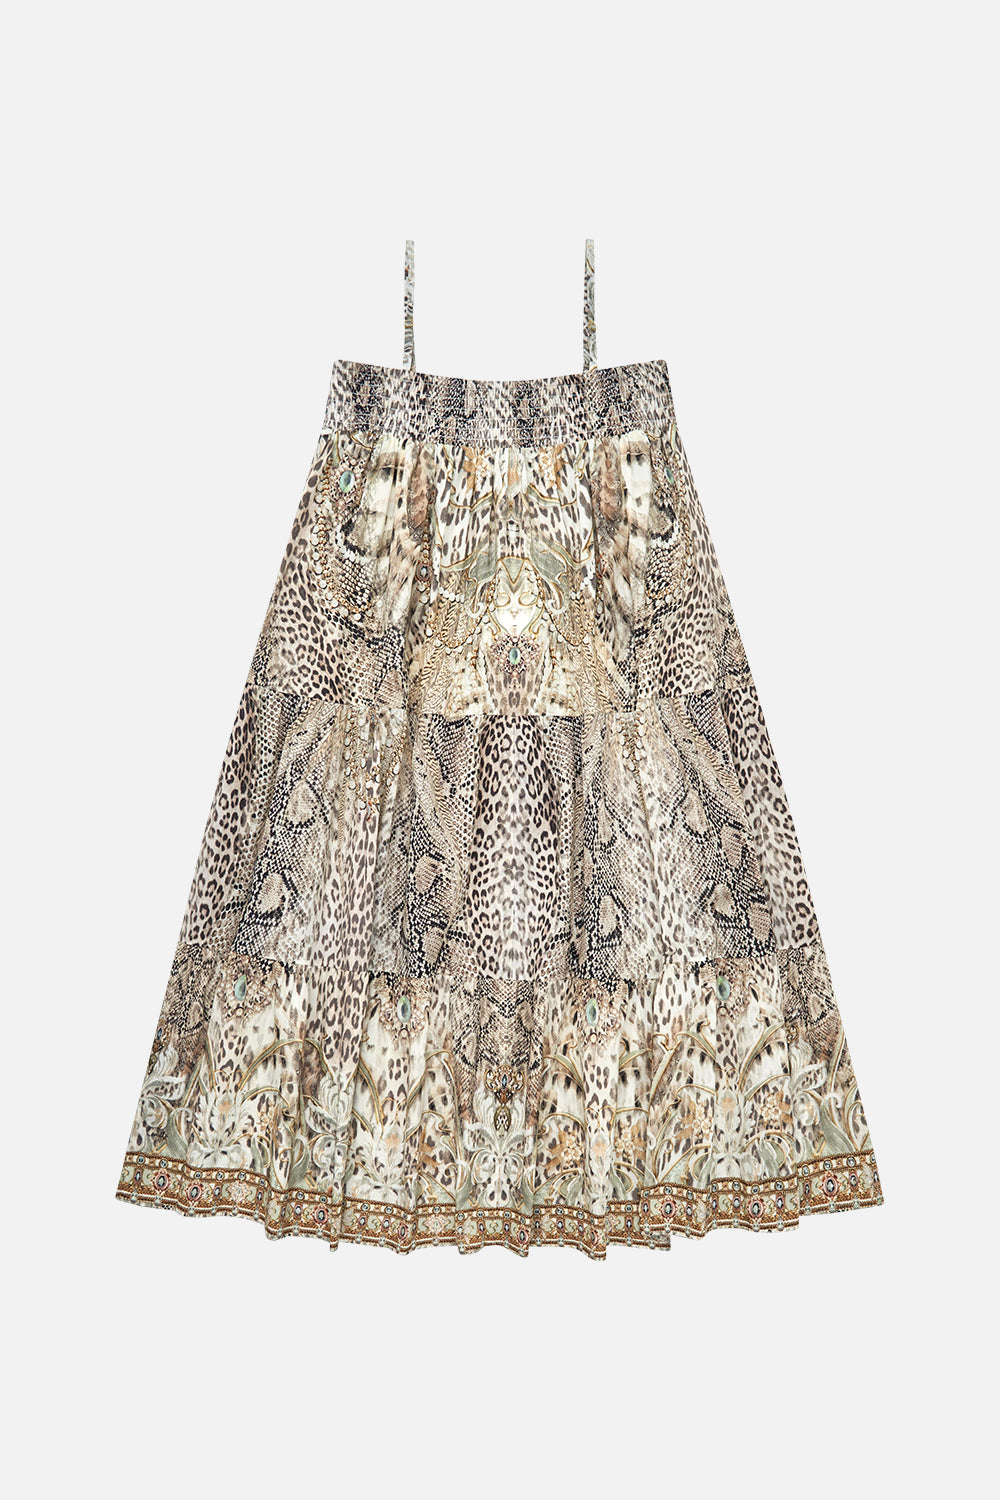 Milla by CAMILLA khaki oprint kids maxi dress in Looking Glass Houses print 